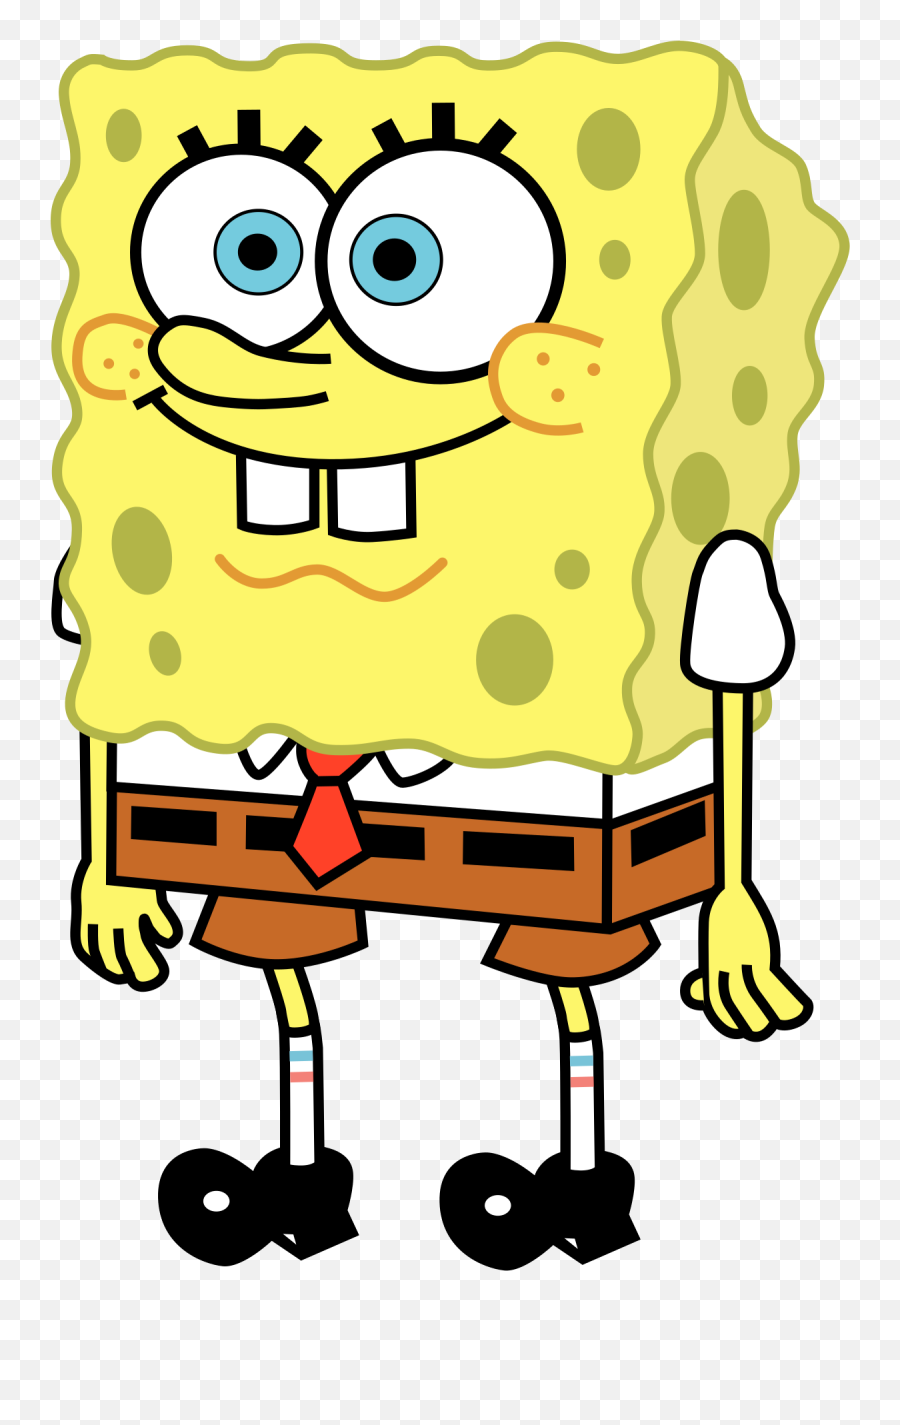 Spongebob Squarepants Character Png 44244 Free Icons Characters Spongebob Squarepants Nickelodeon Spongebob Face Png Free Transparent Png Images Pngaaa Com - spongebob pants roblox free